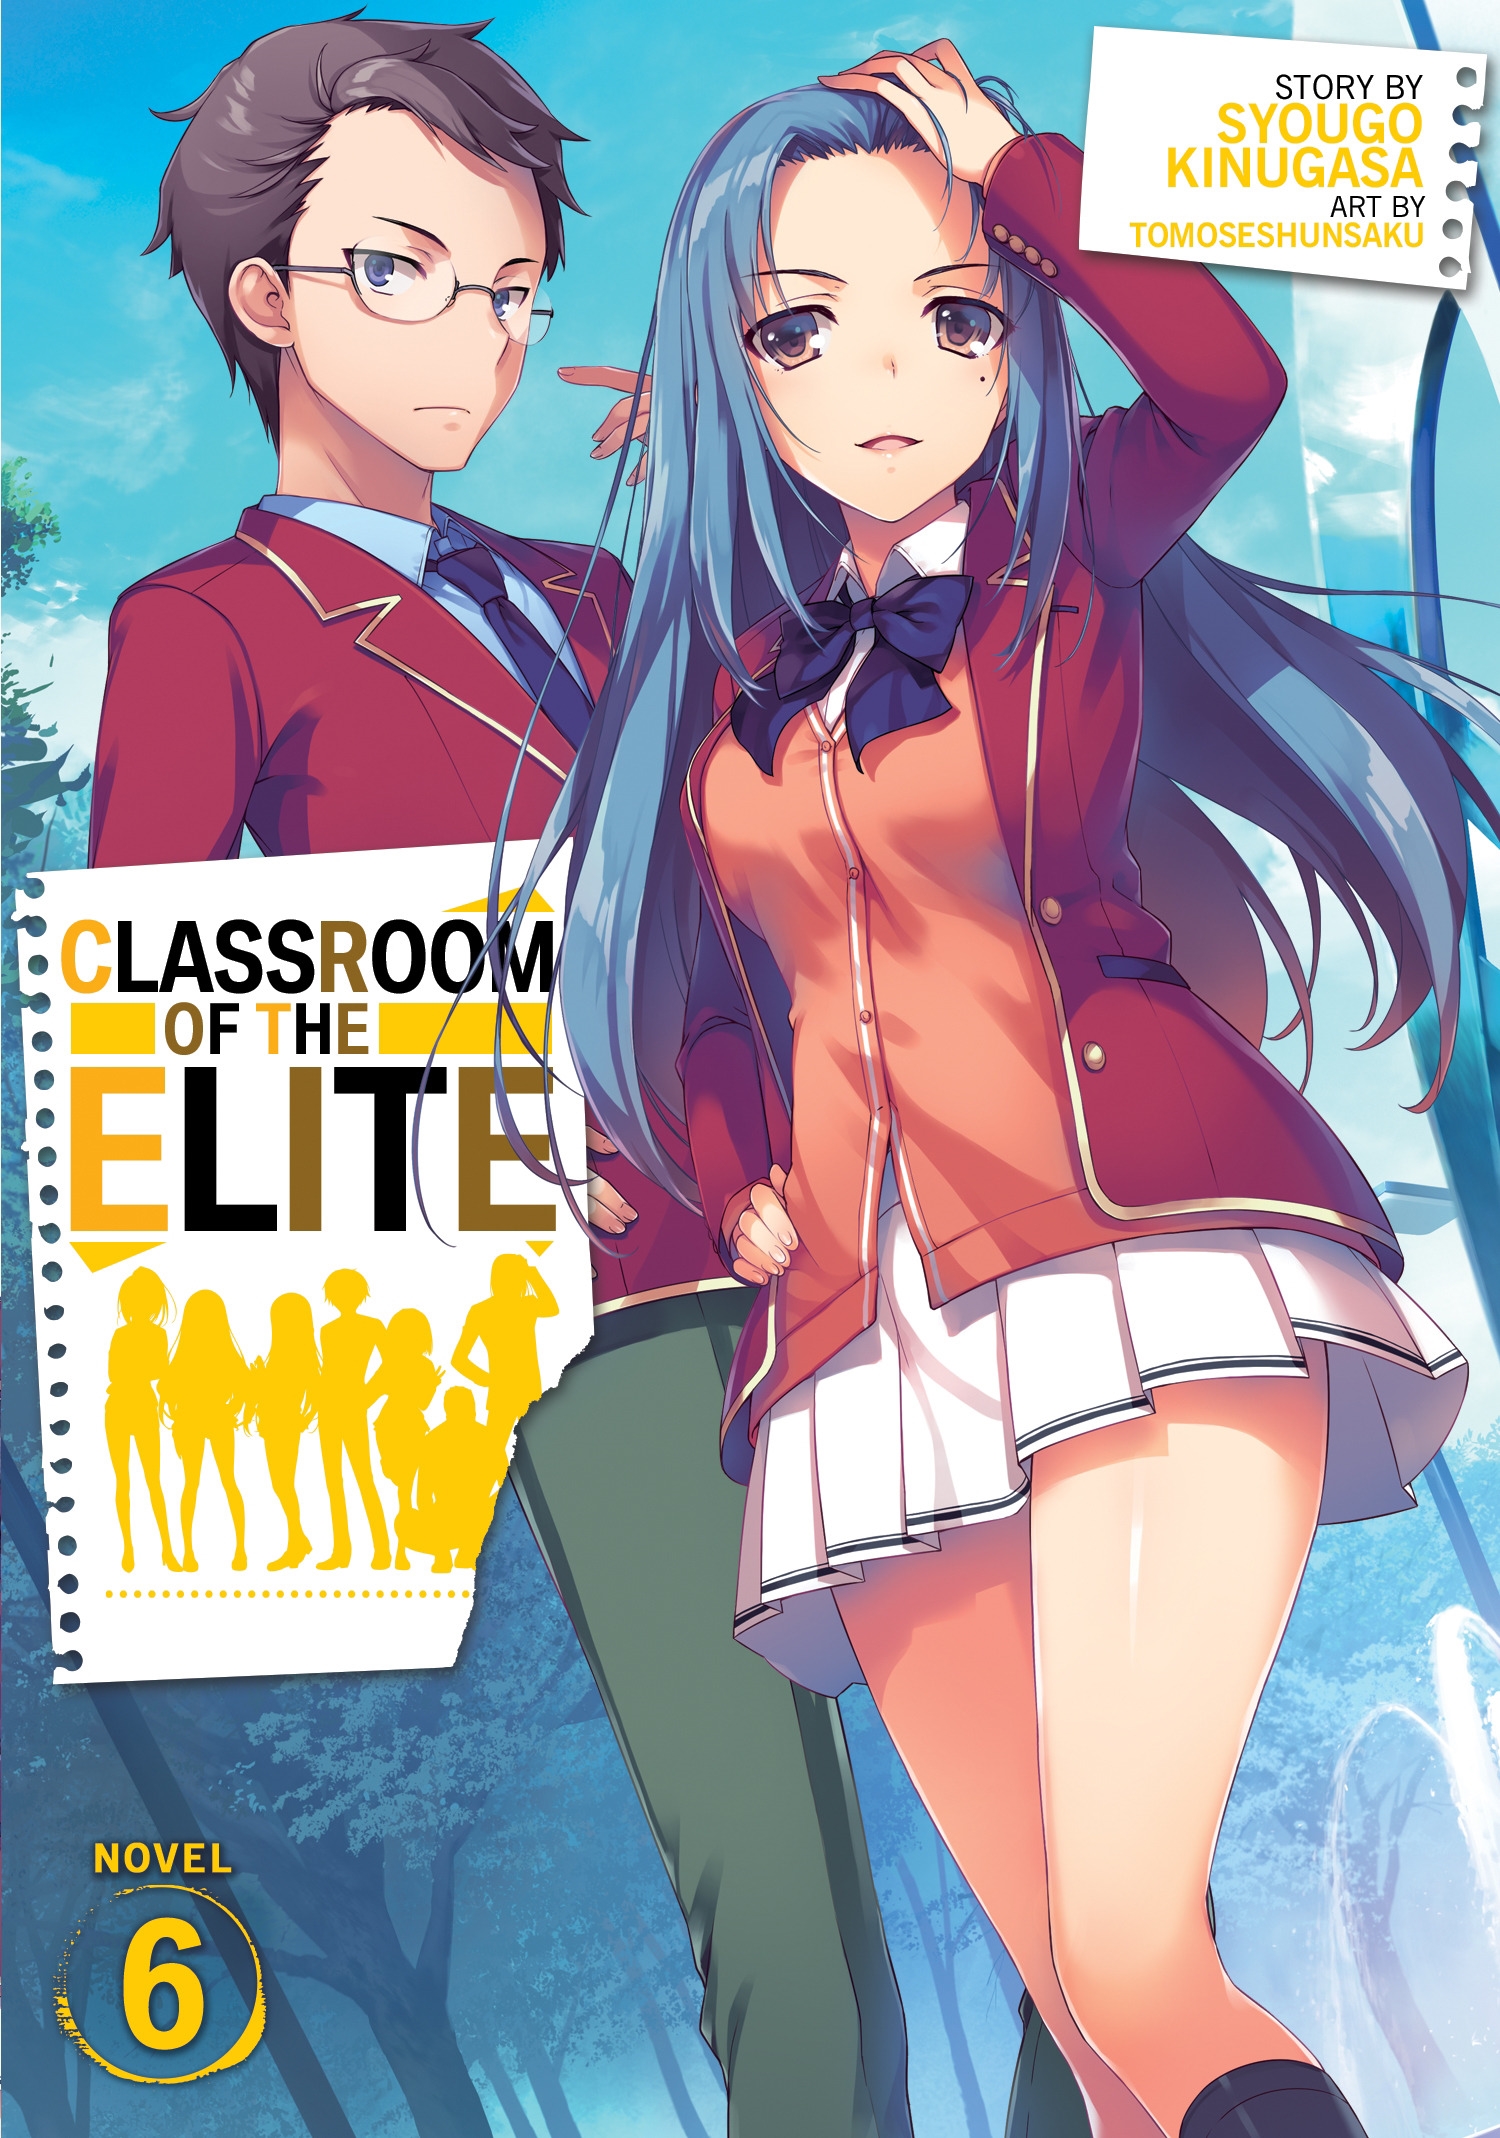 Classroom of the Elite Year 2 (Light Novel) Vol. 6 by Syougo Kinugasa -  Penguin Books New Zealand